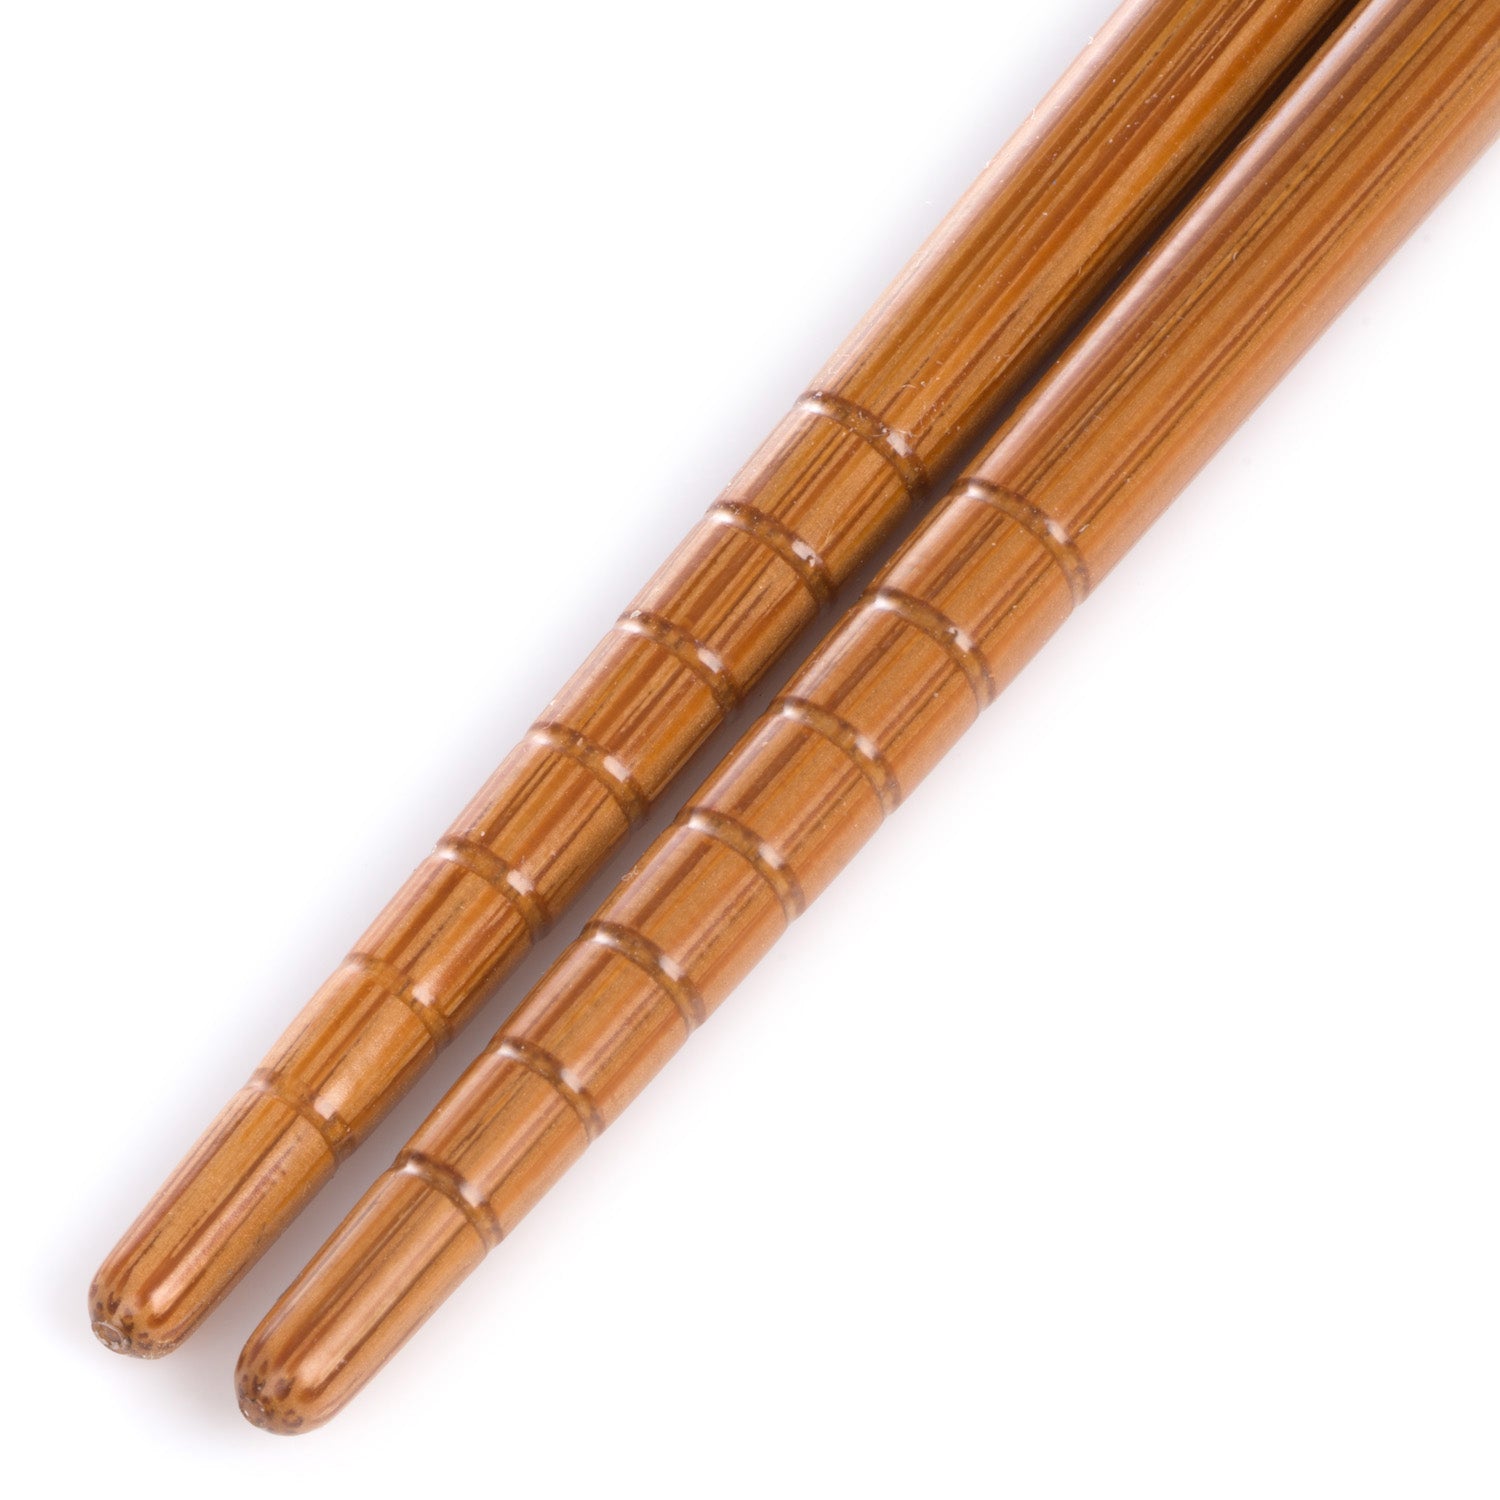 Shigure Traditional Japanese Chopsticks